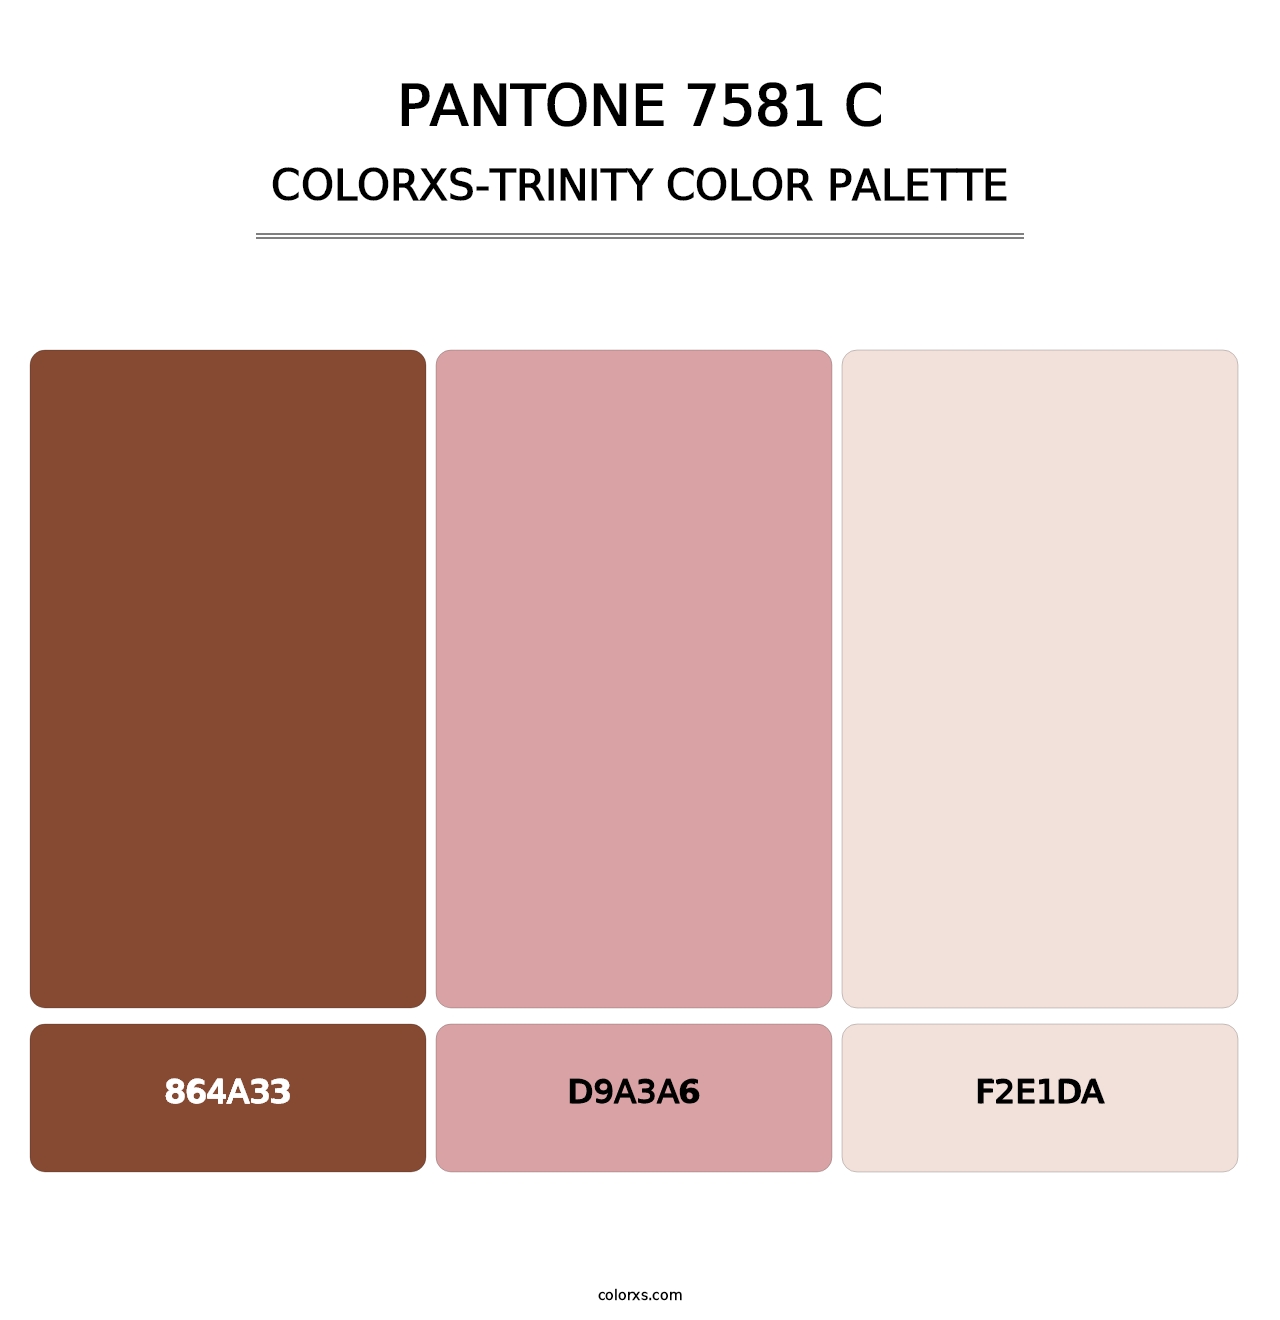 PANTONE 7581 C - Colorxs Trinity Palette